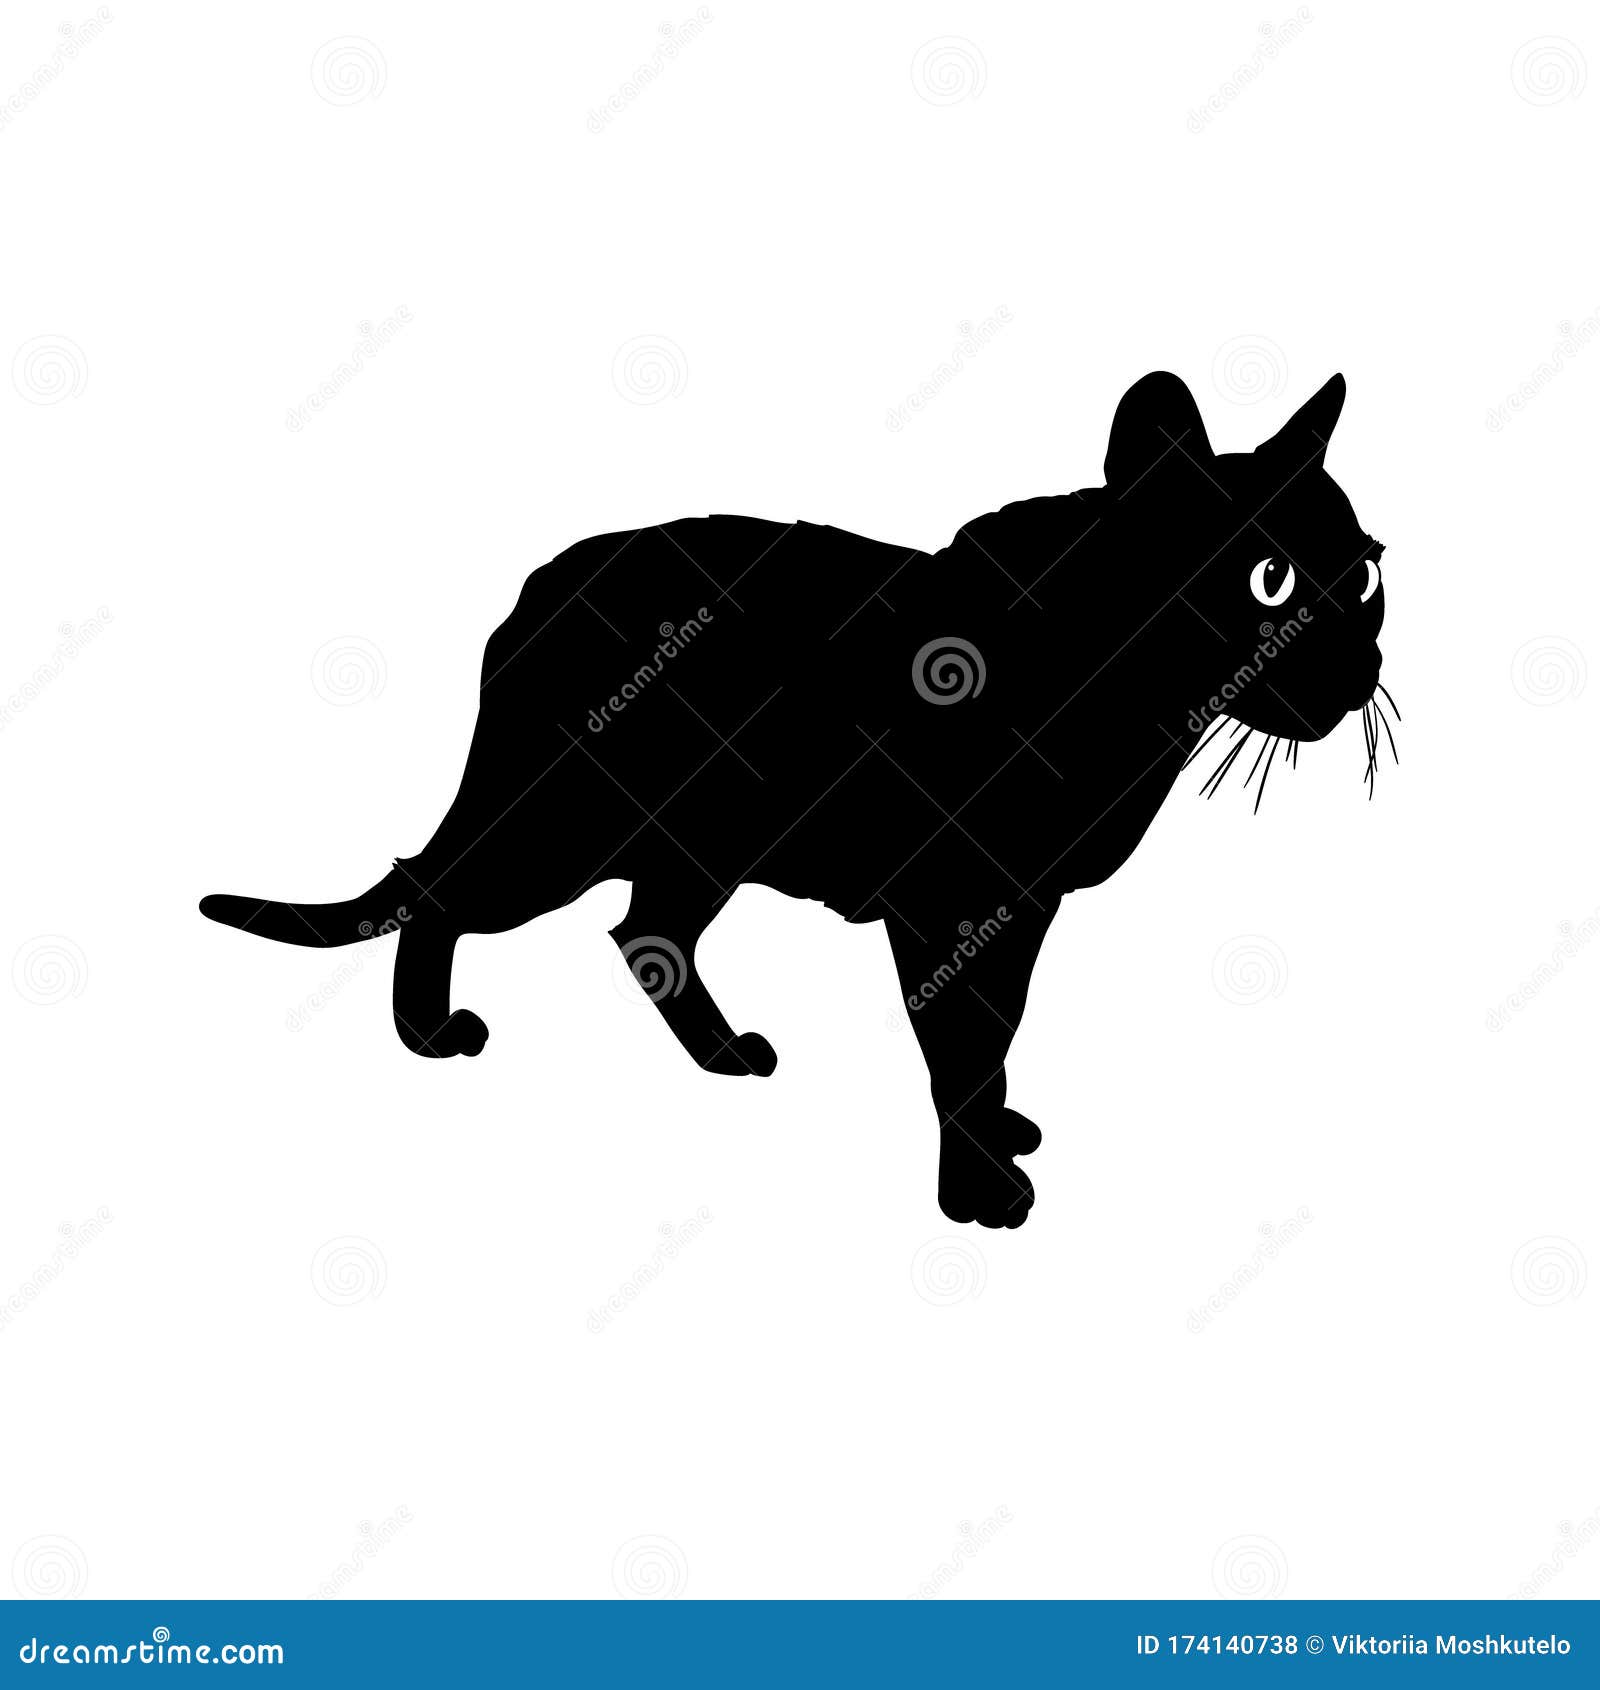 23+ Silhouette Black Cat Walking Pics